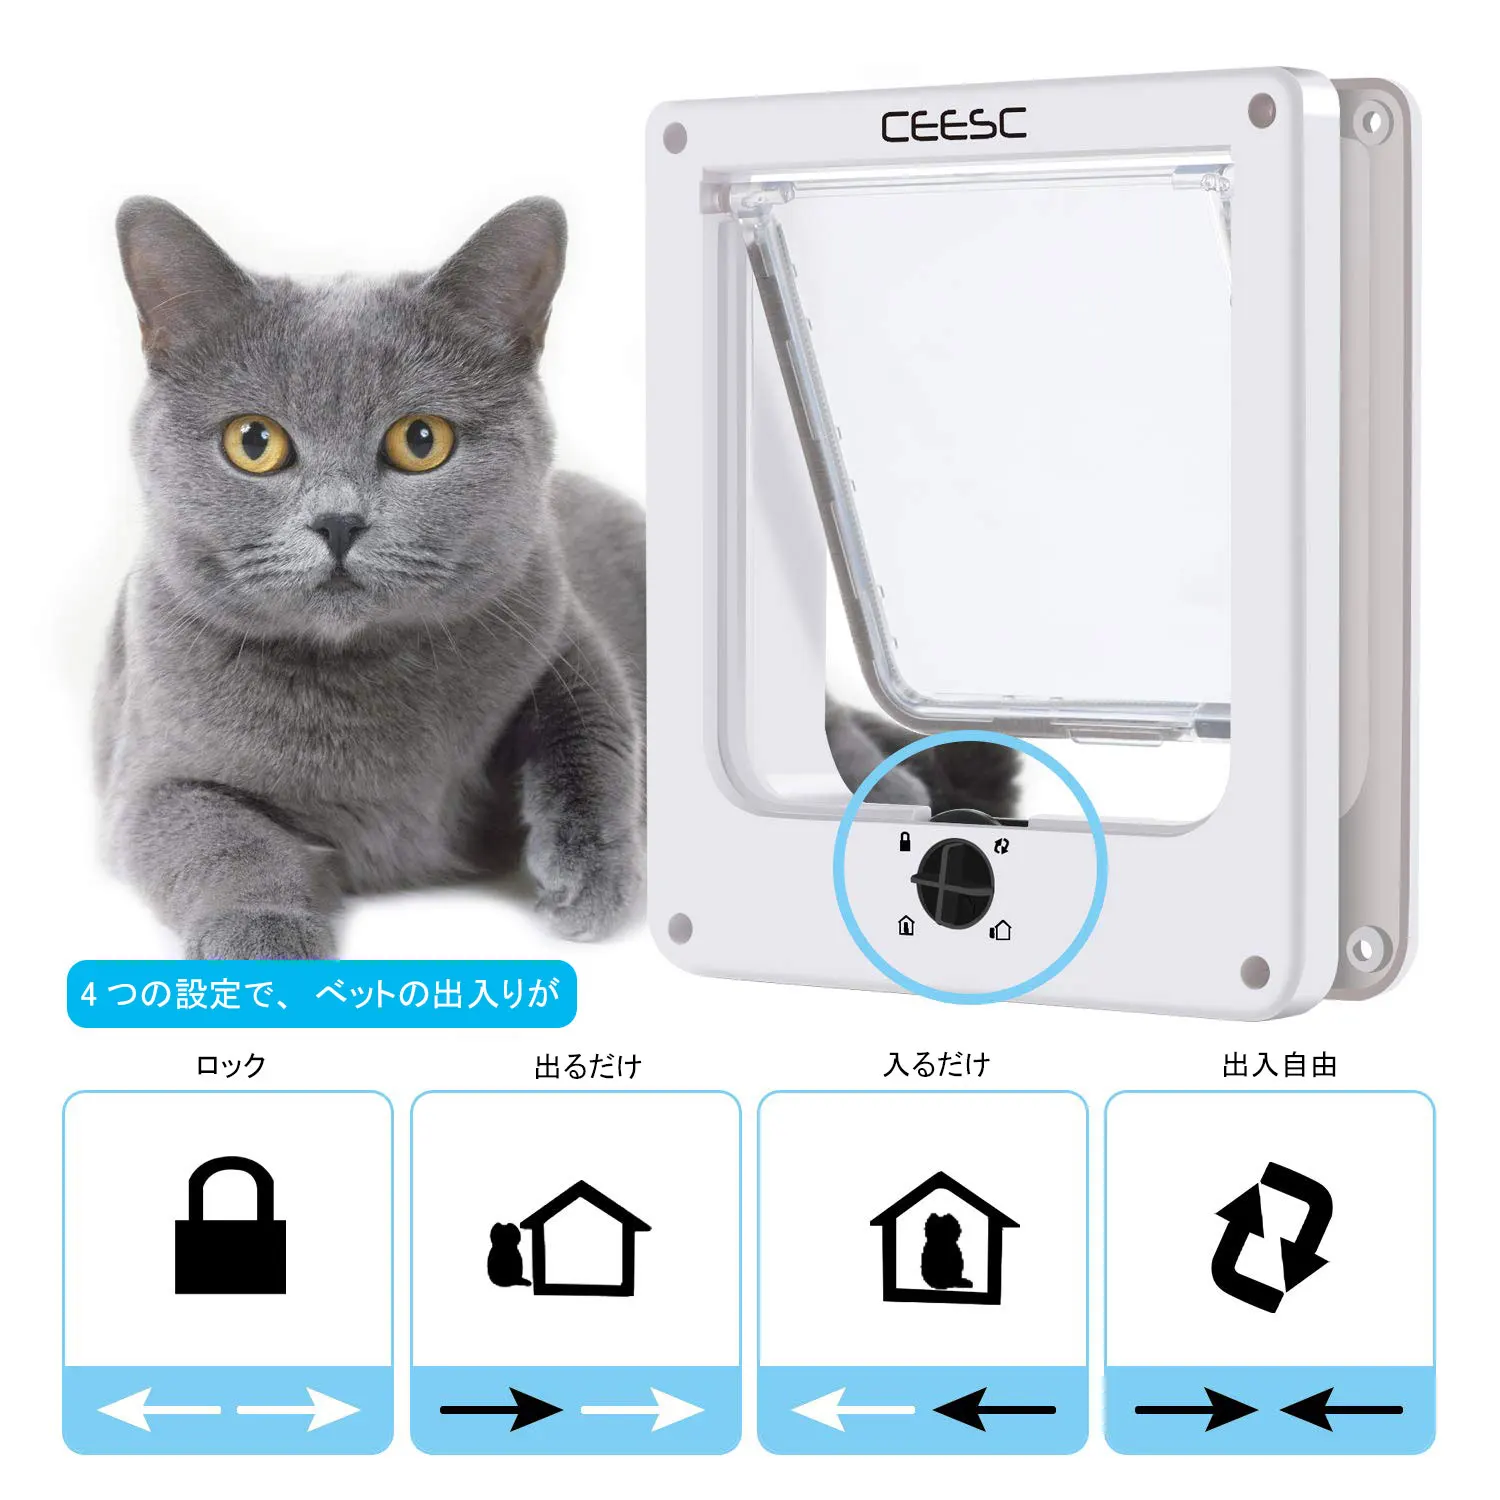 CEESC Cat Doors Medium, Black Kitties and Kittens Magnetic Pet Door with Rotary 4 Way Lock for Cats